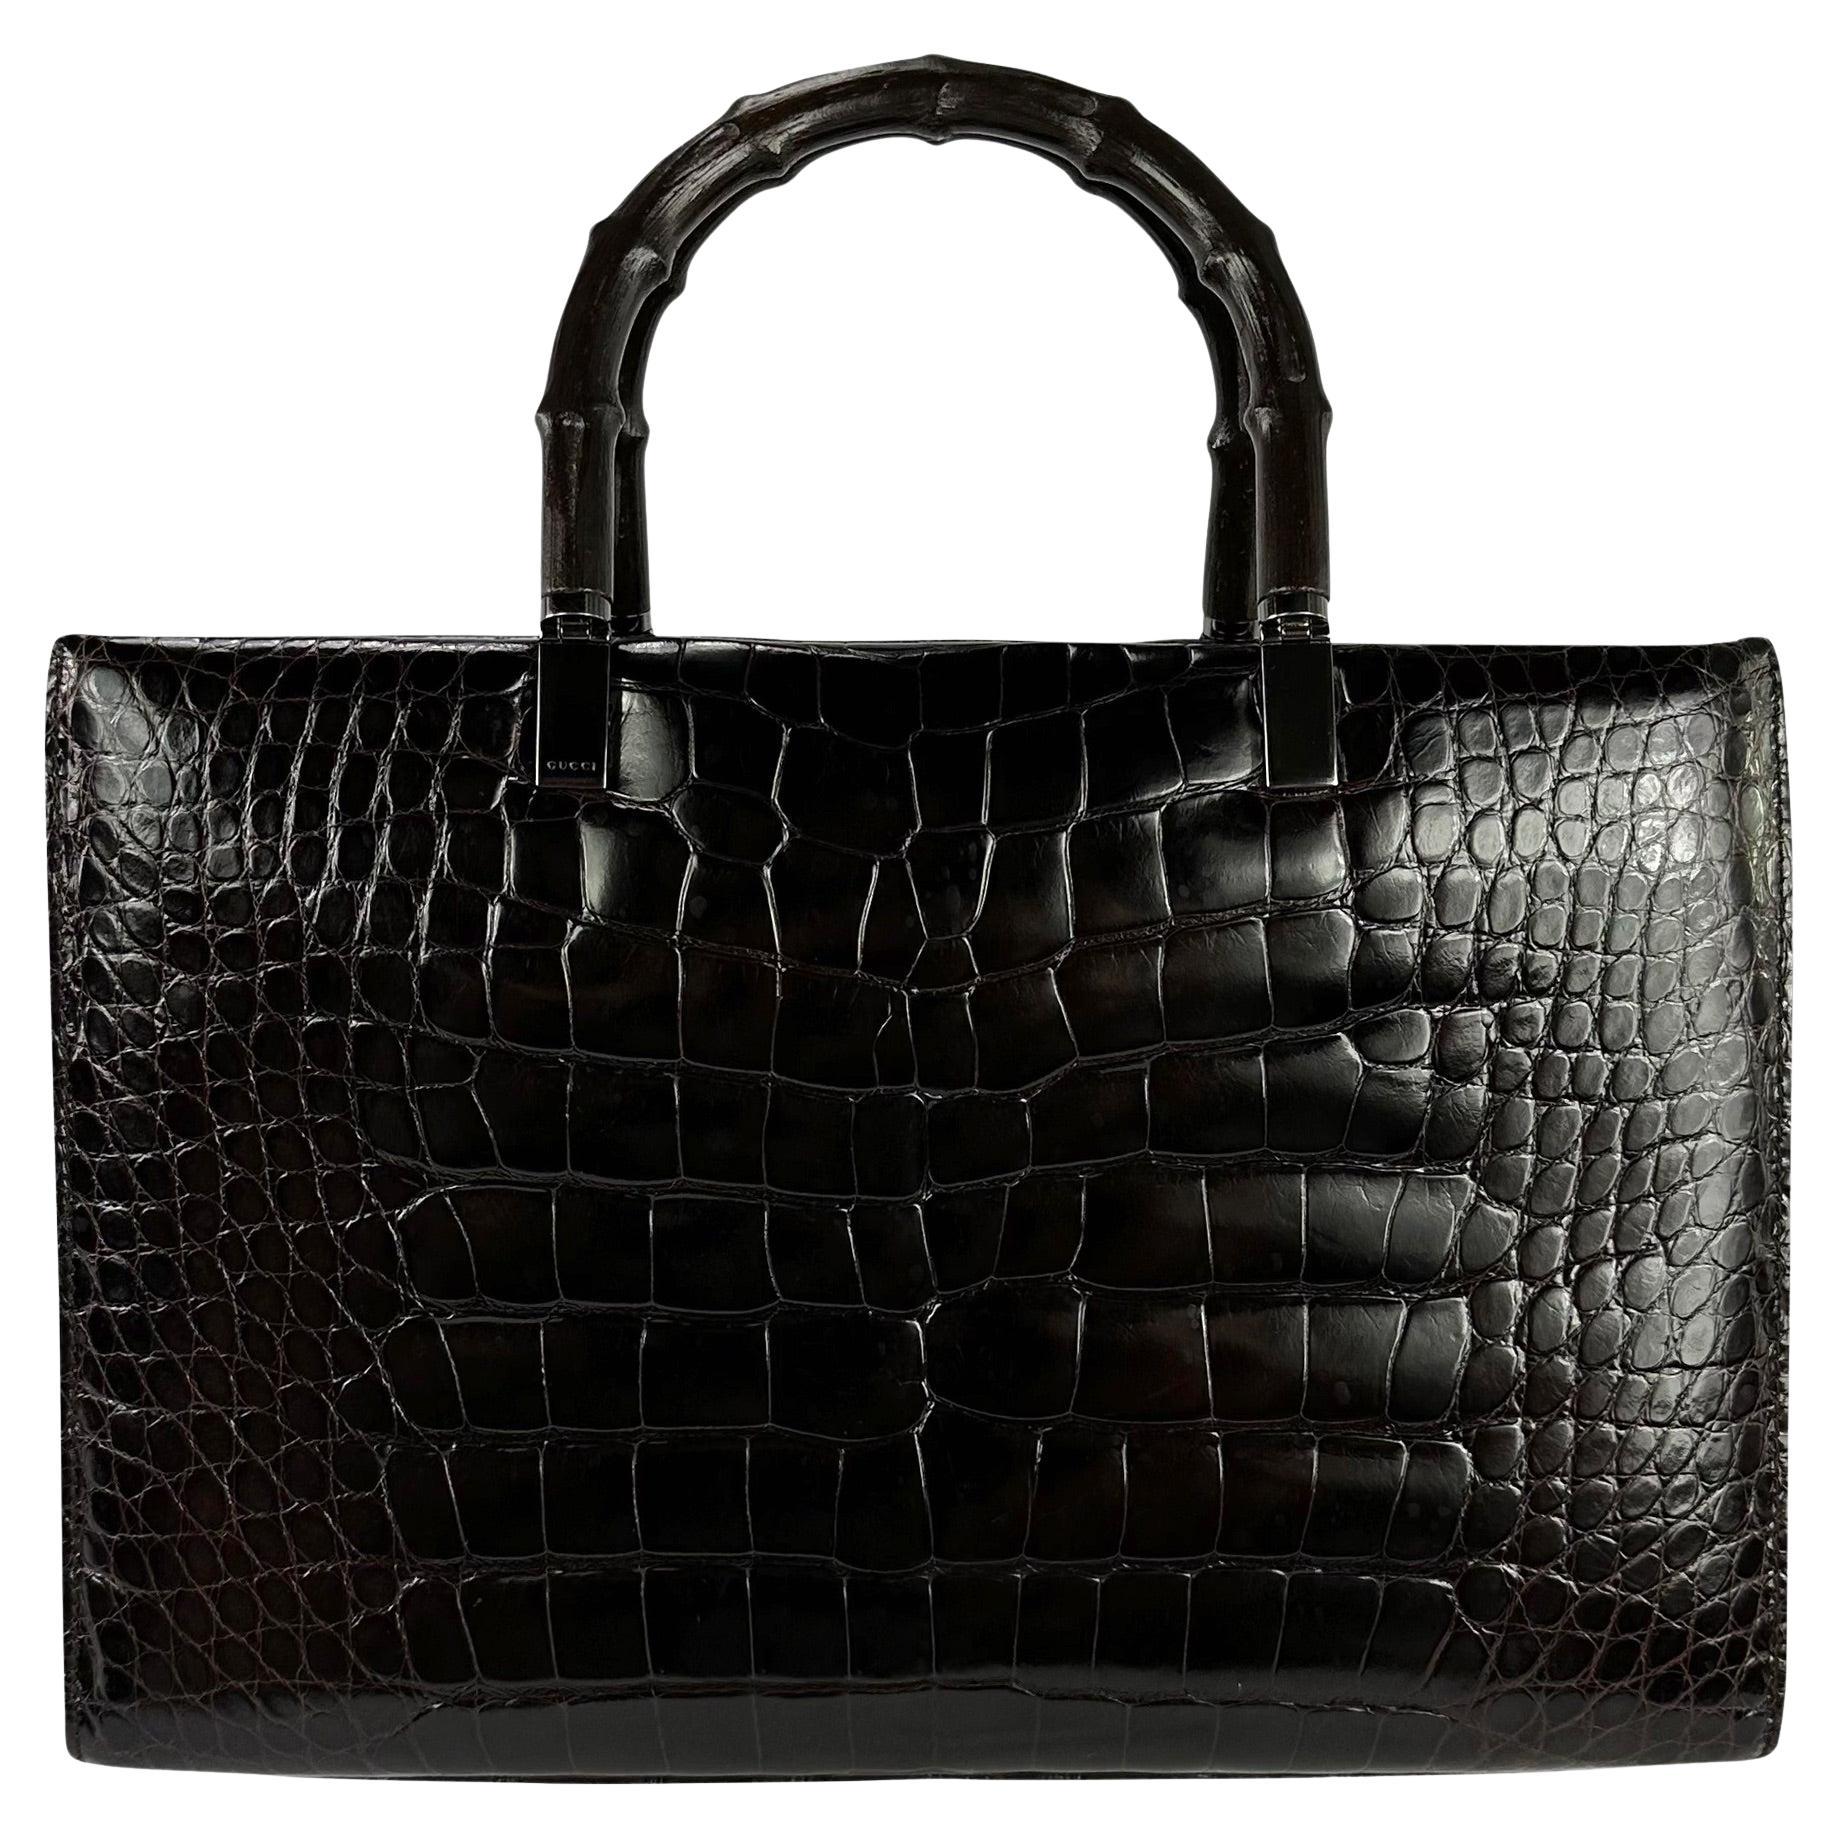 F/W 1998 Gucci by Tom Ford Ad Campaign Black Crocodile Bamboo Tote Bag  For Sale